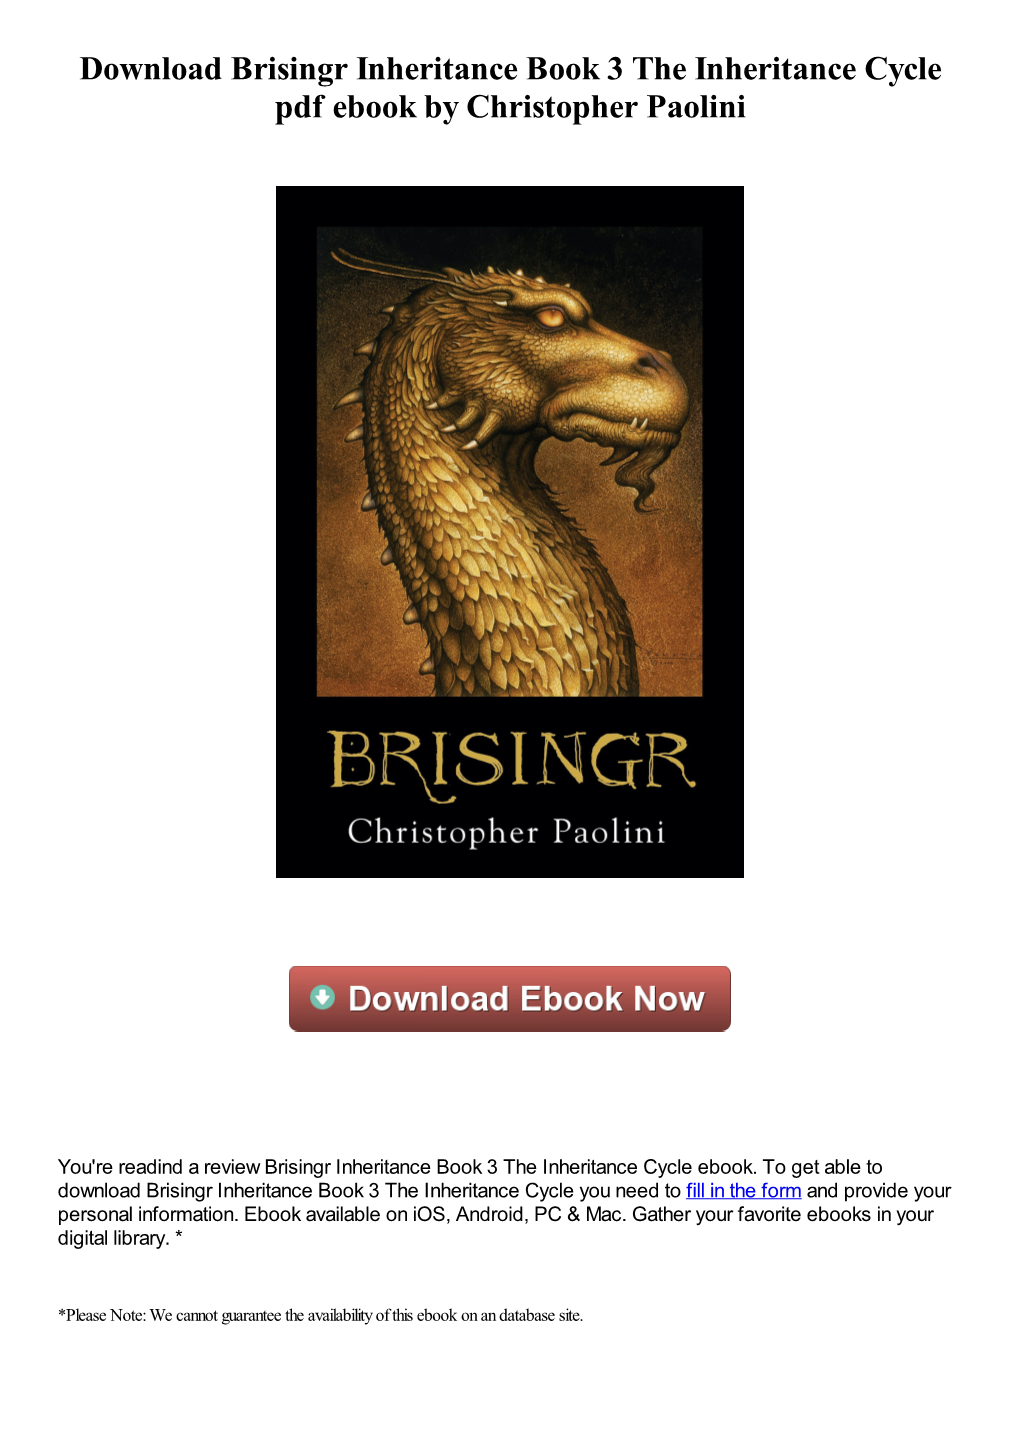 Download Brisingr Inheritance Book 3 the Inheritance Cycle Pdf Book By